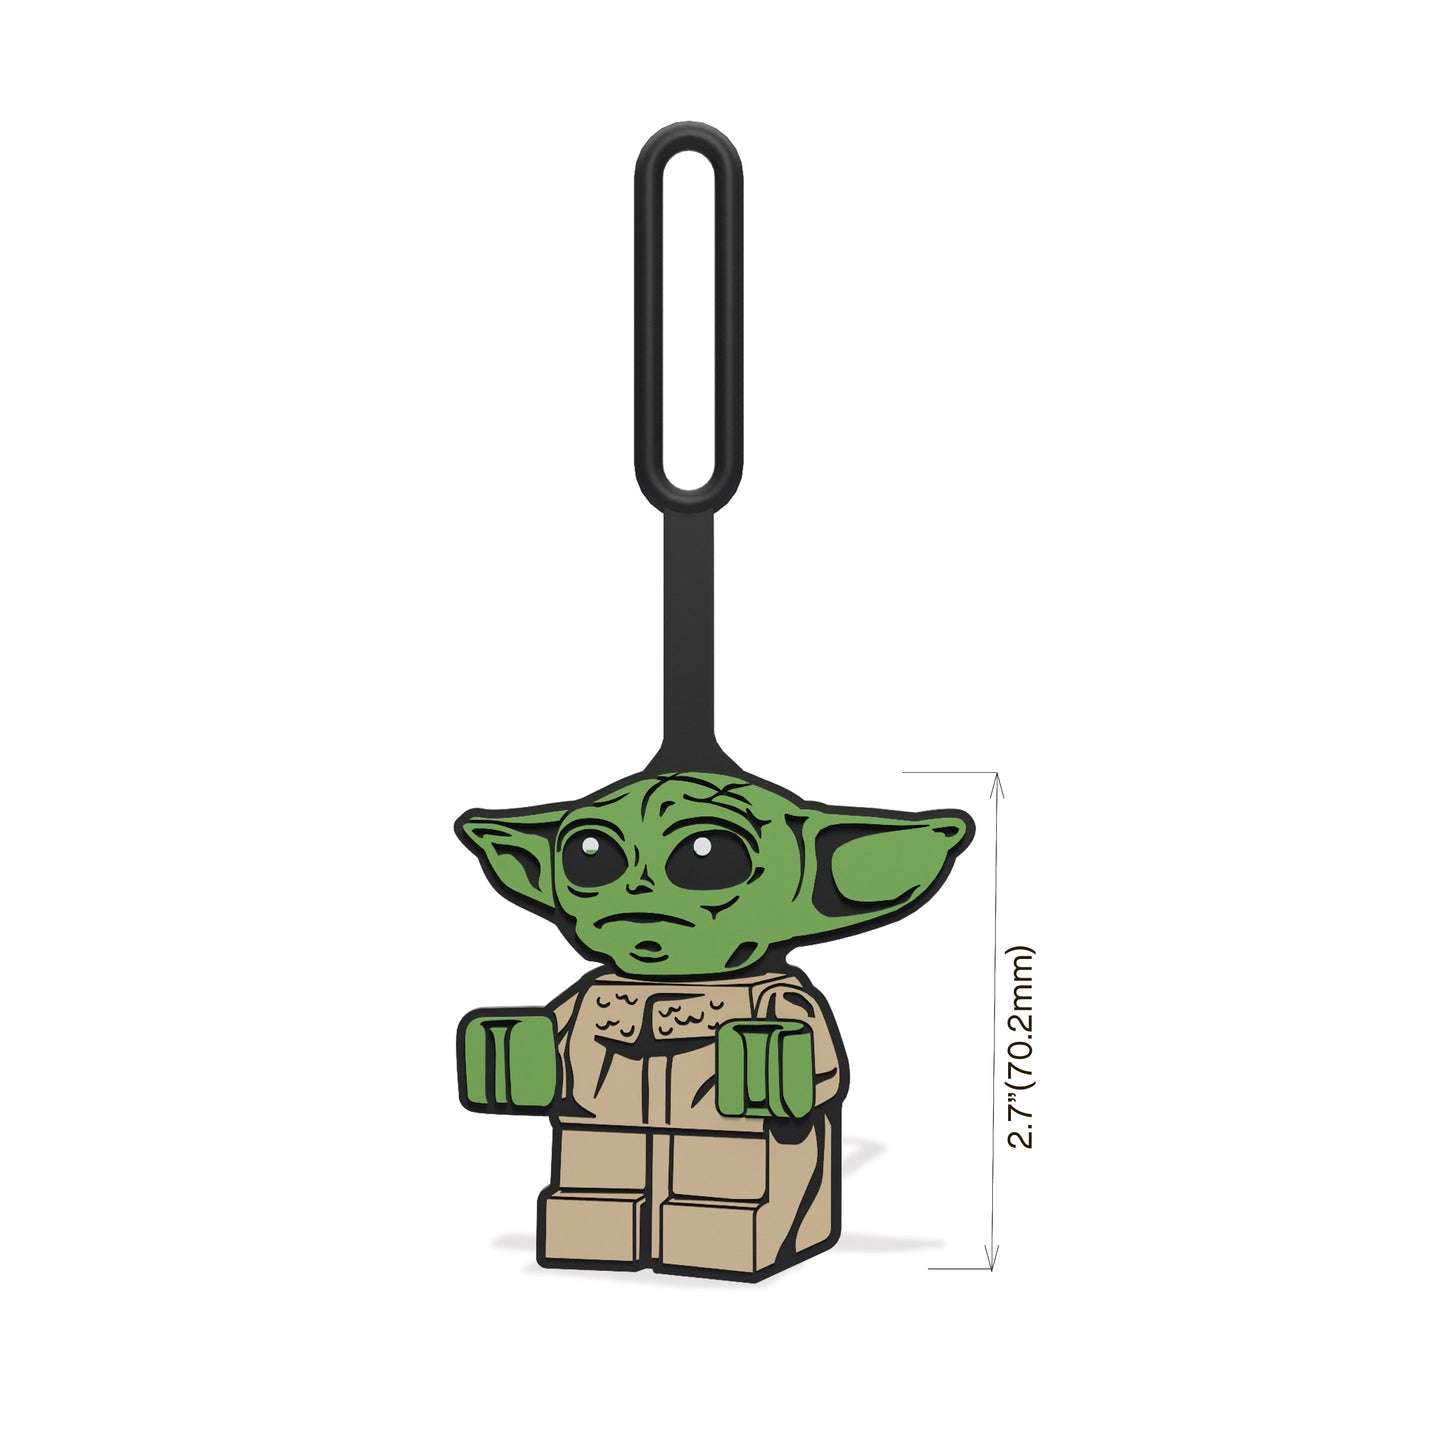 IQ LEGO® STAR WARS Serious Baby Yoda Bag Tag (52949)